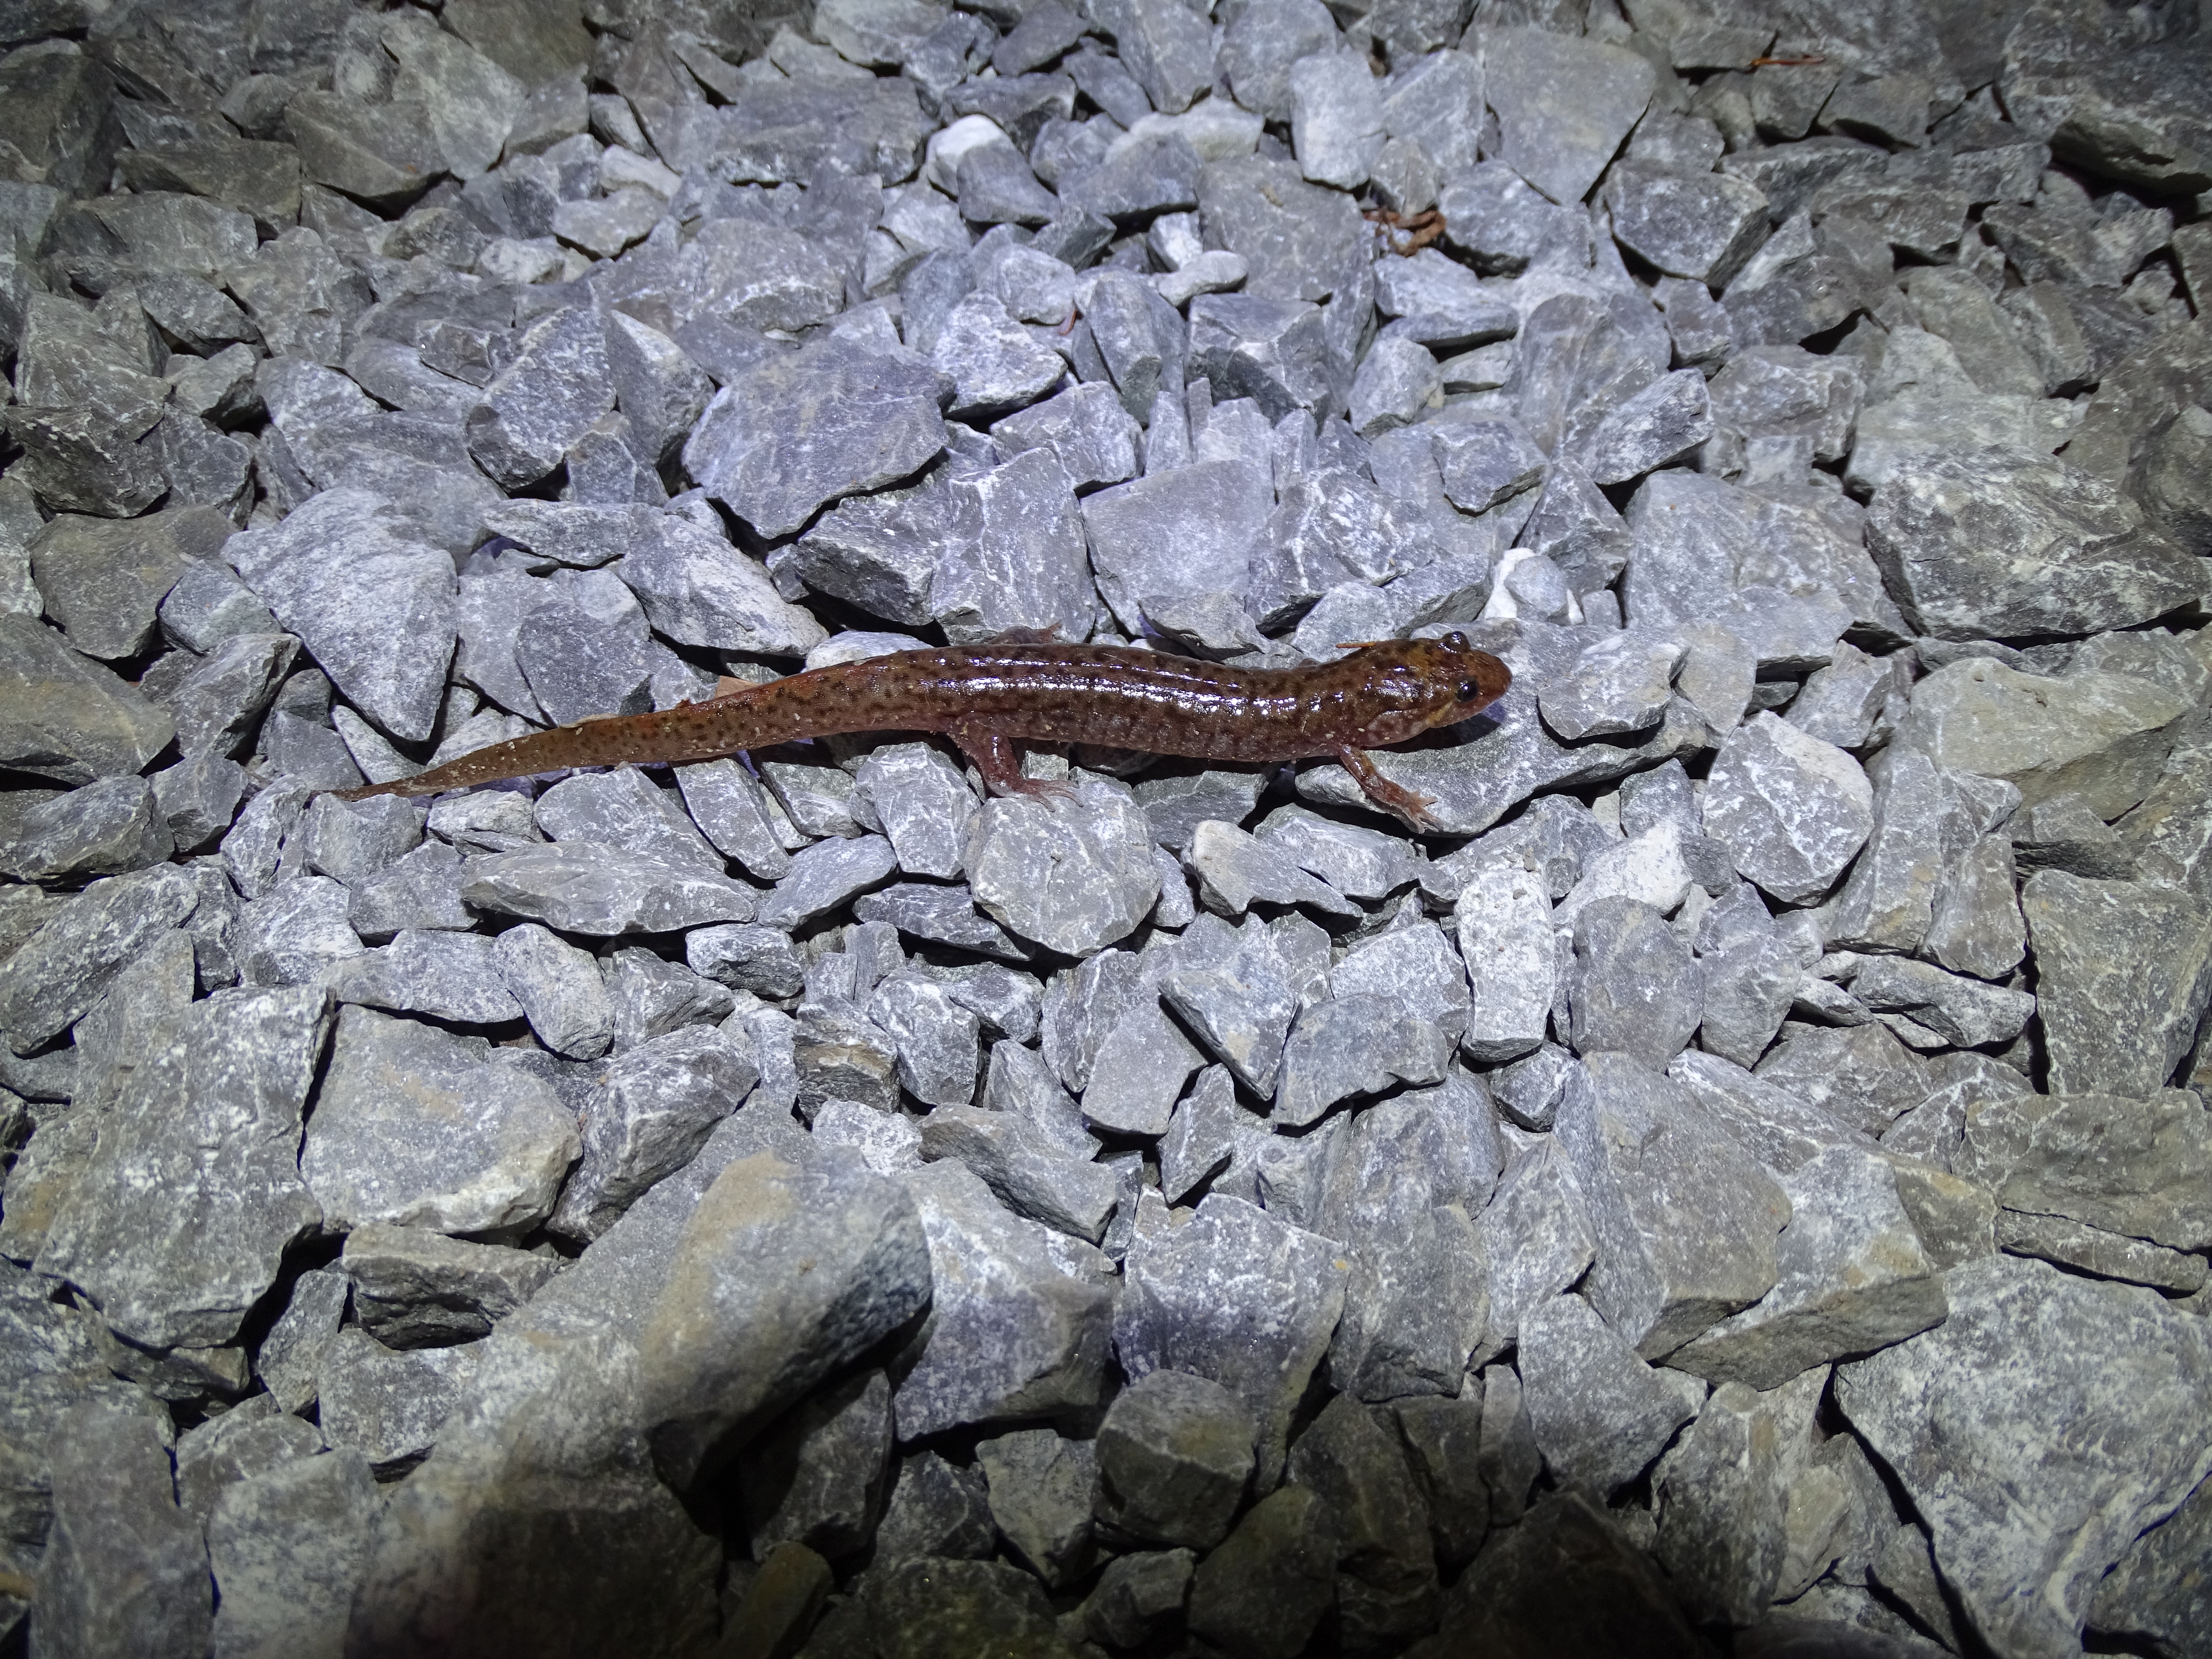 a small orange-brown salamander in bright white light on gravel.